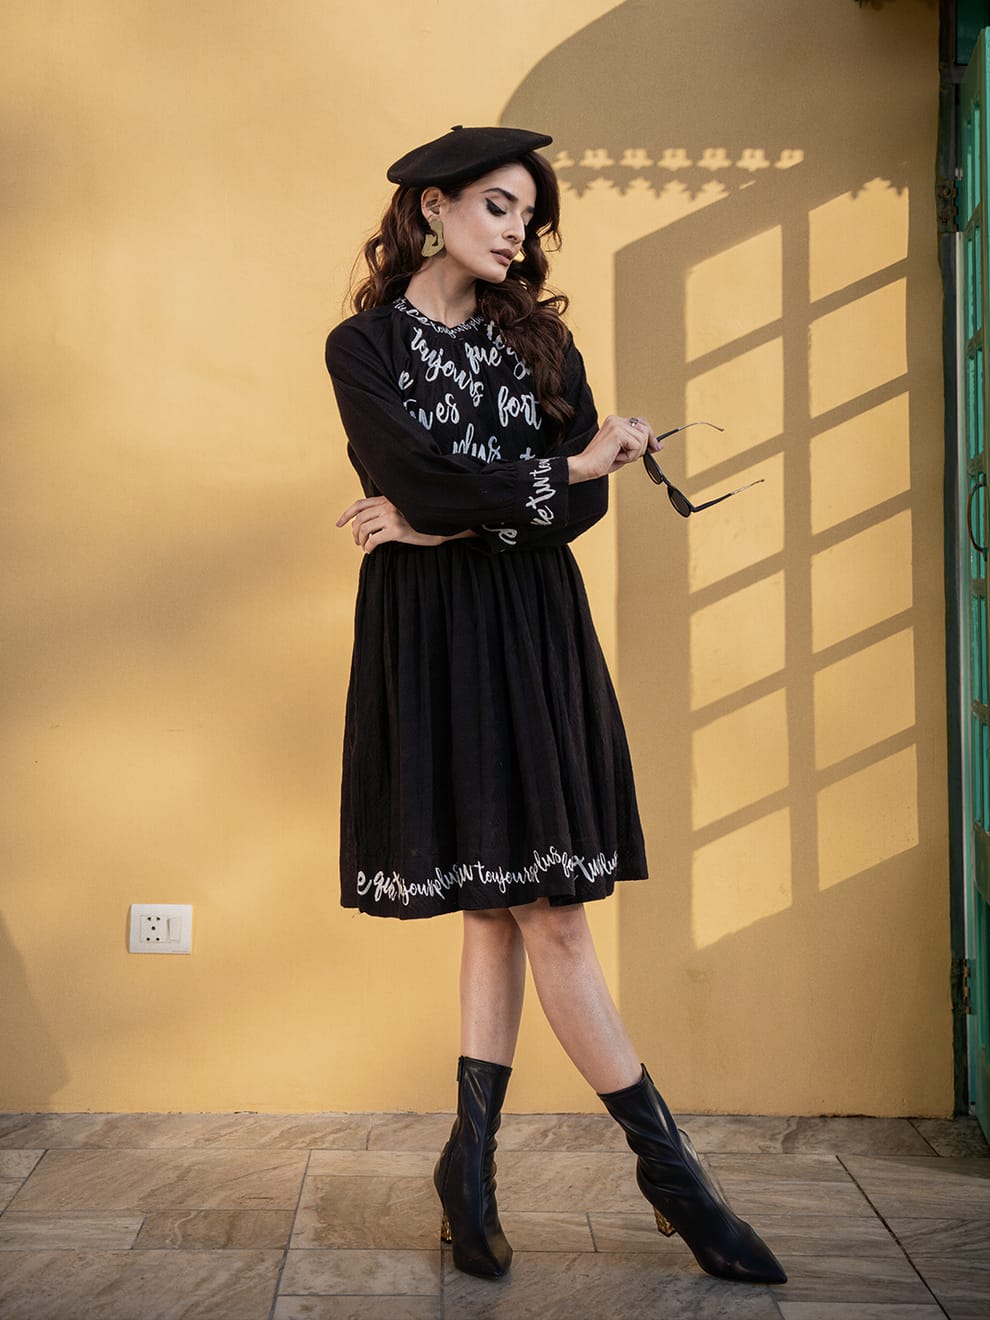 Sleek and Stylish: Black Cotton Print Dress